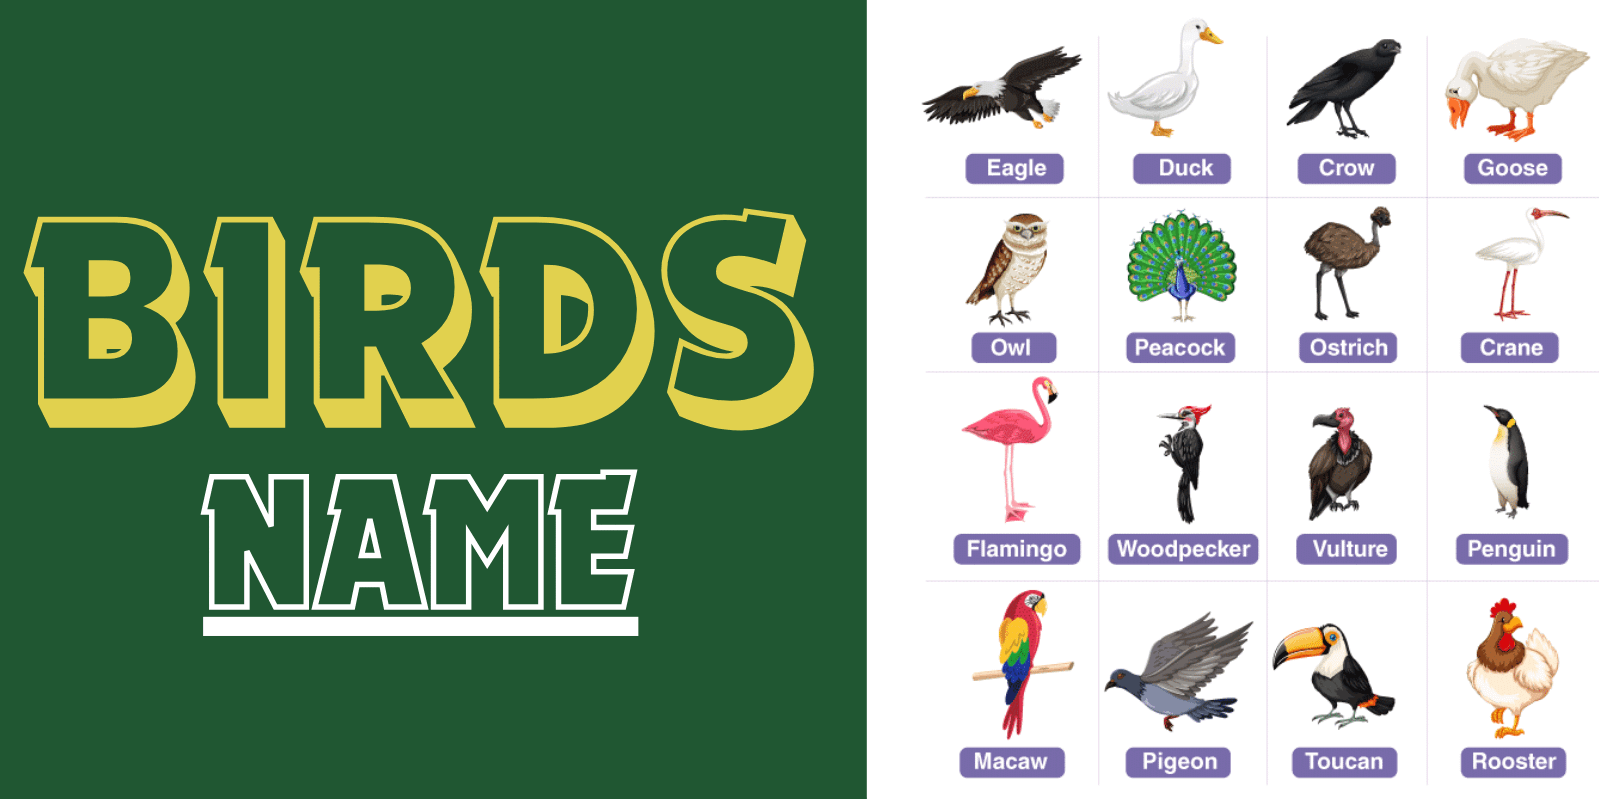 Birds name in English